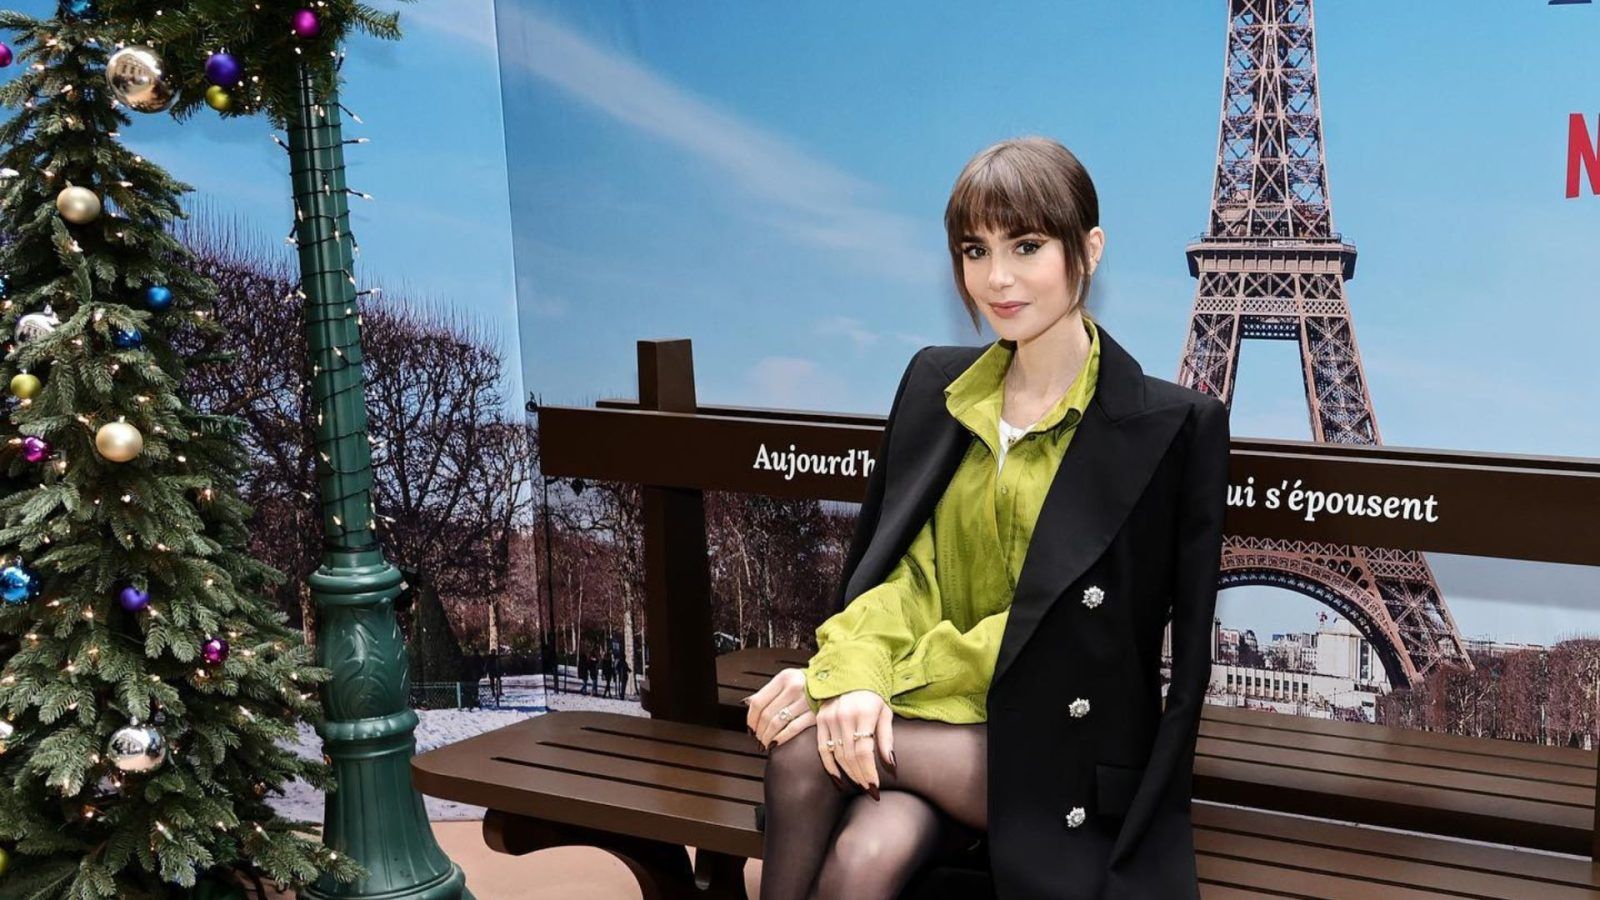 6 Best 'Emily in Paris' Season 3 Outfits: Shop 'Emily in Paris' Fashion